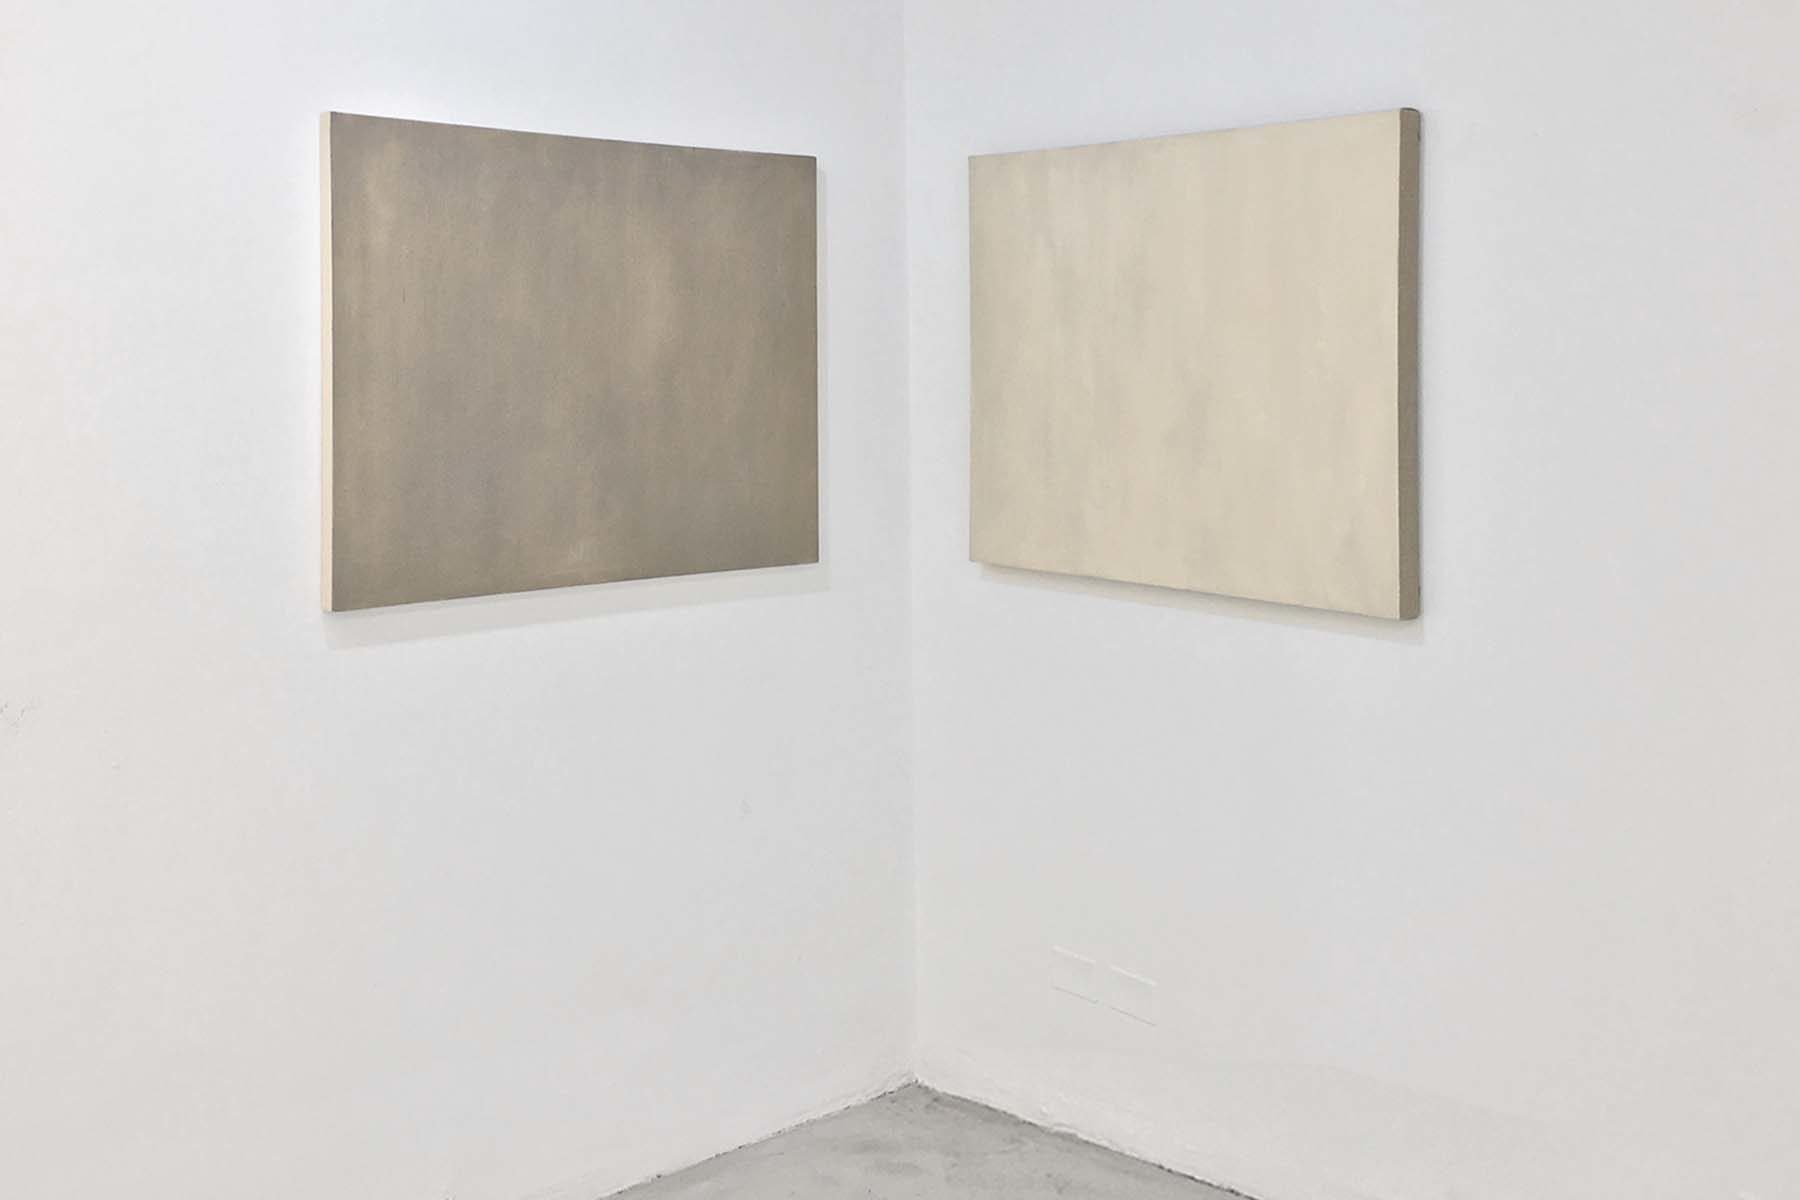 Eugenia Vanni, Portrait of each other (Portrait of cotton canvas on linen canvas; Portrait of linen canvas on cotton canvas), 2016, oil on canvas, each 80 x